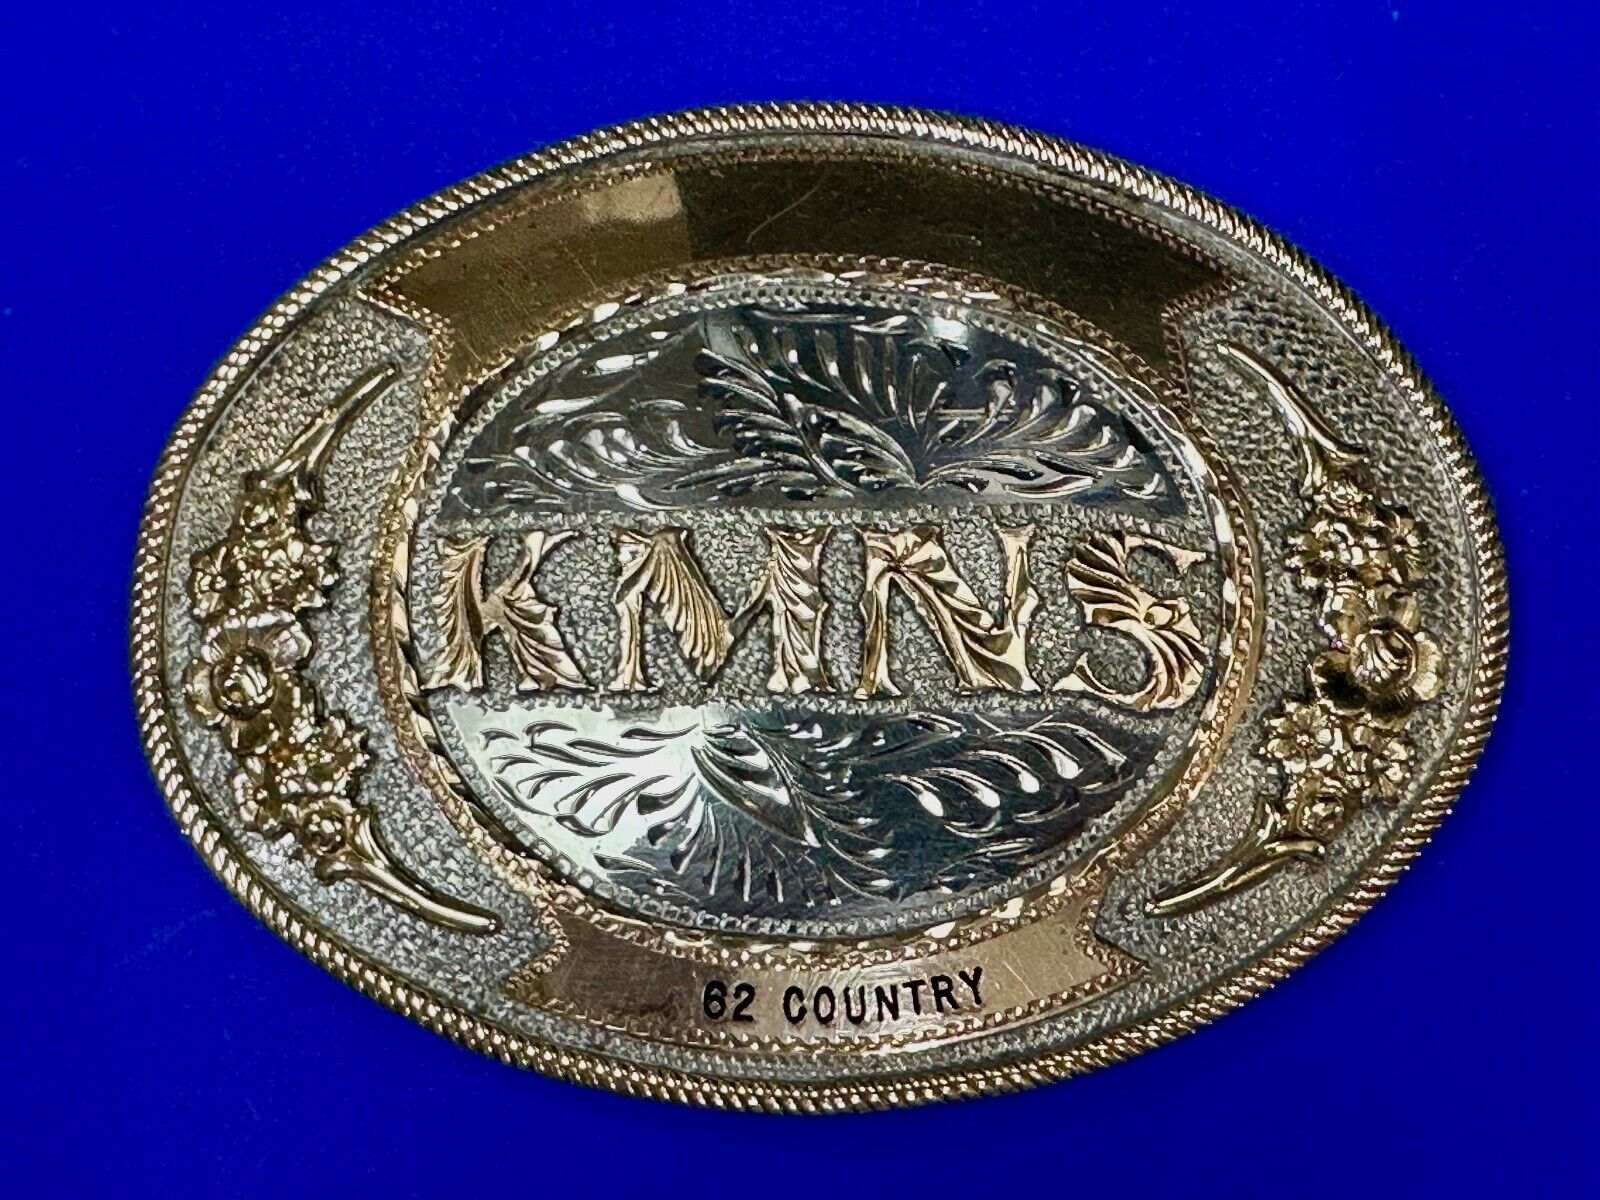 KMNS 82 Country Radio Iowa - Rodeo Trophy style belt buckle A Wil-Aren Original